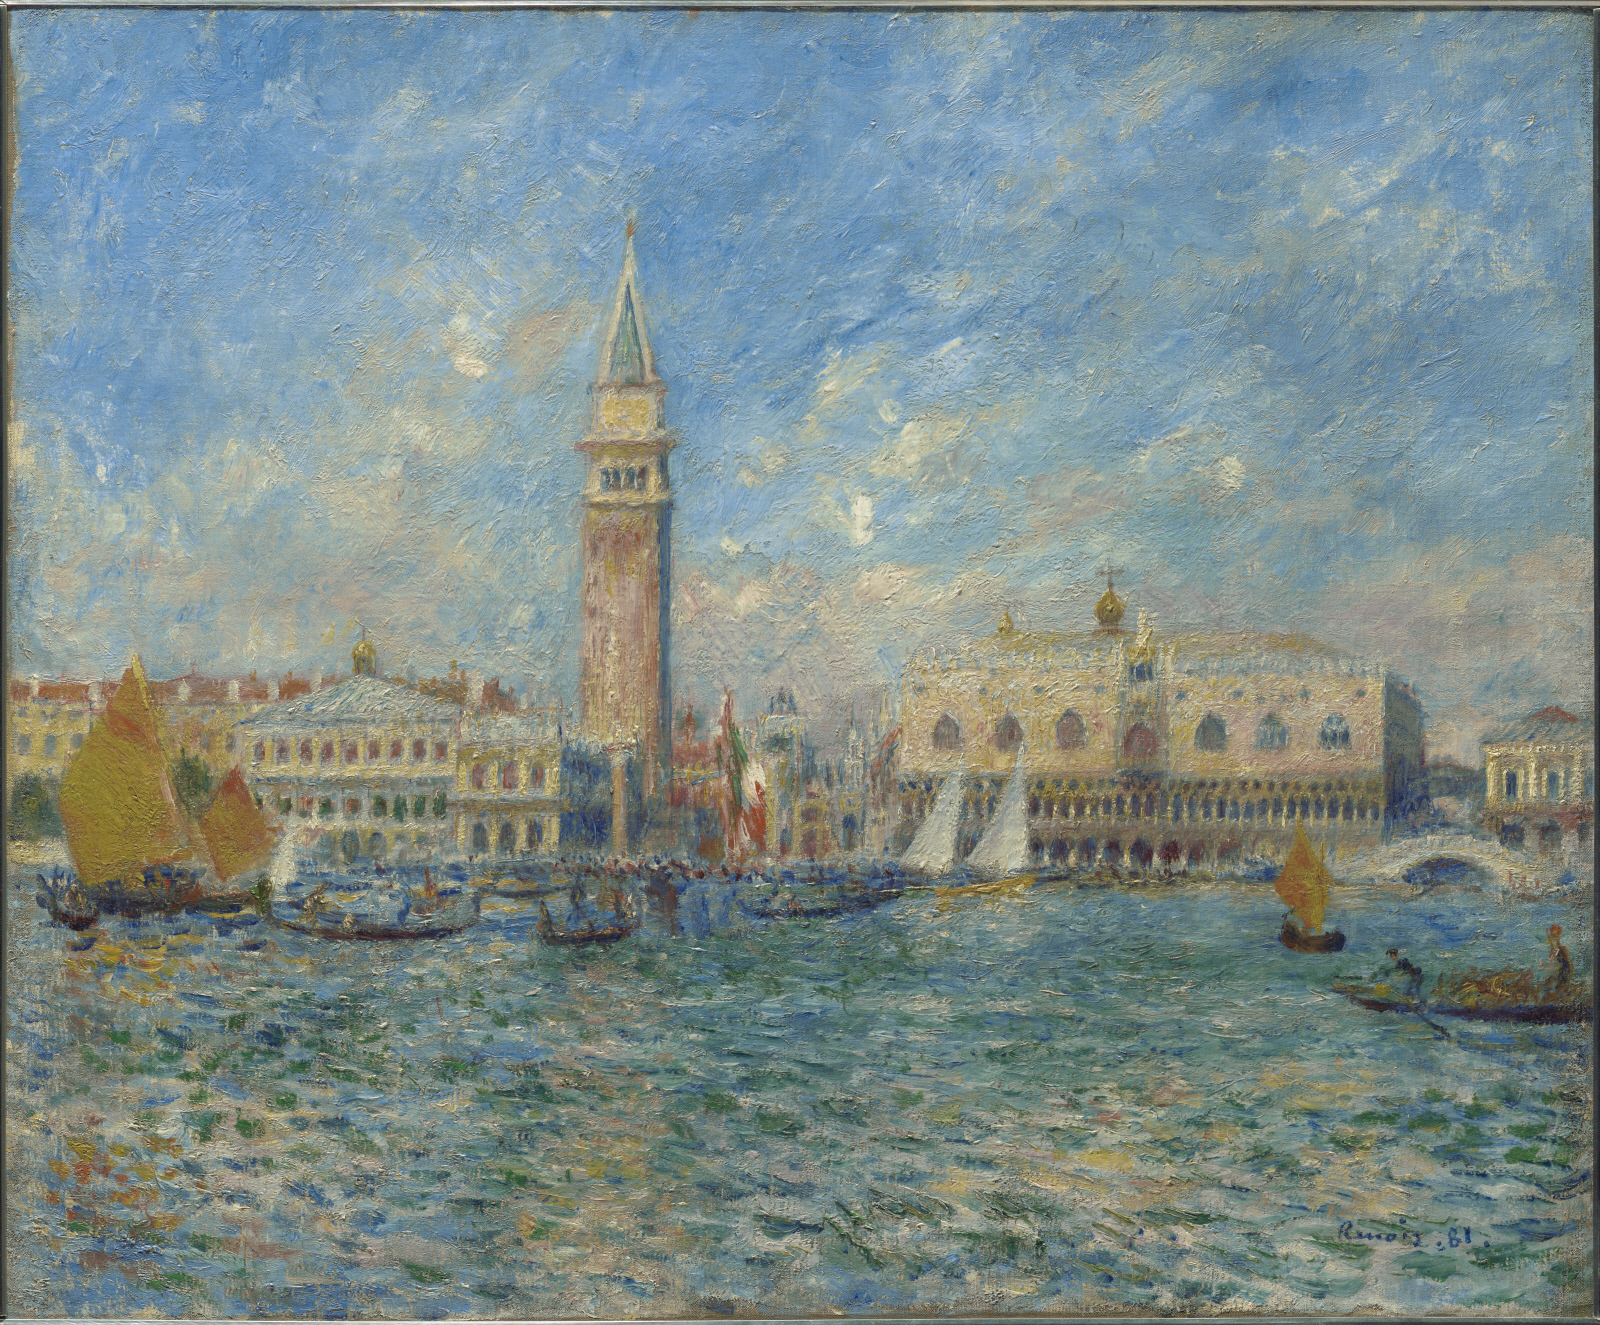 Venice, the Doge's Palace by Pierre-Auguste Renoir - 1881 - 54.5 x 65.7 cm The Clark